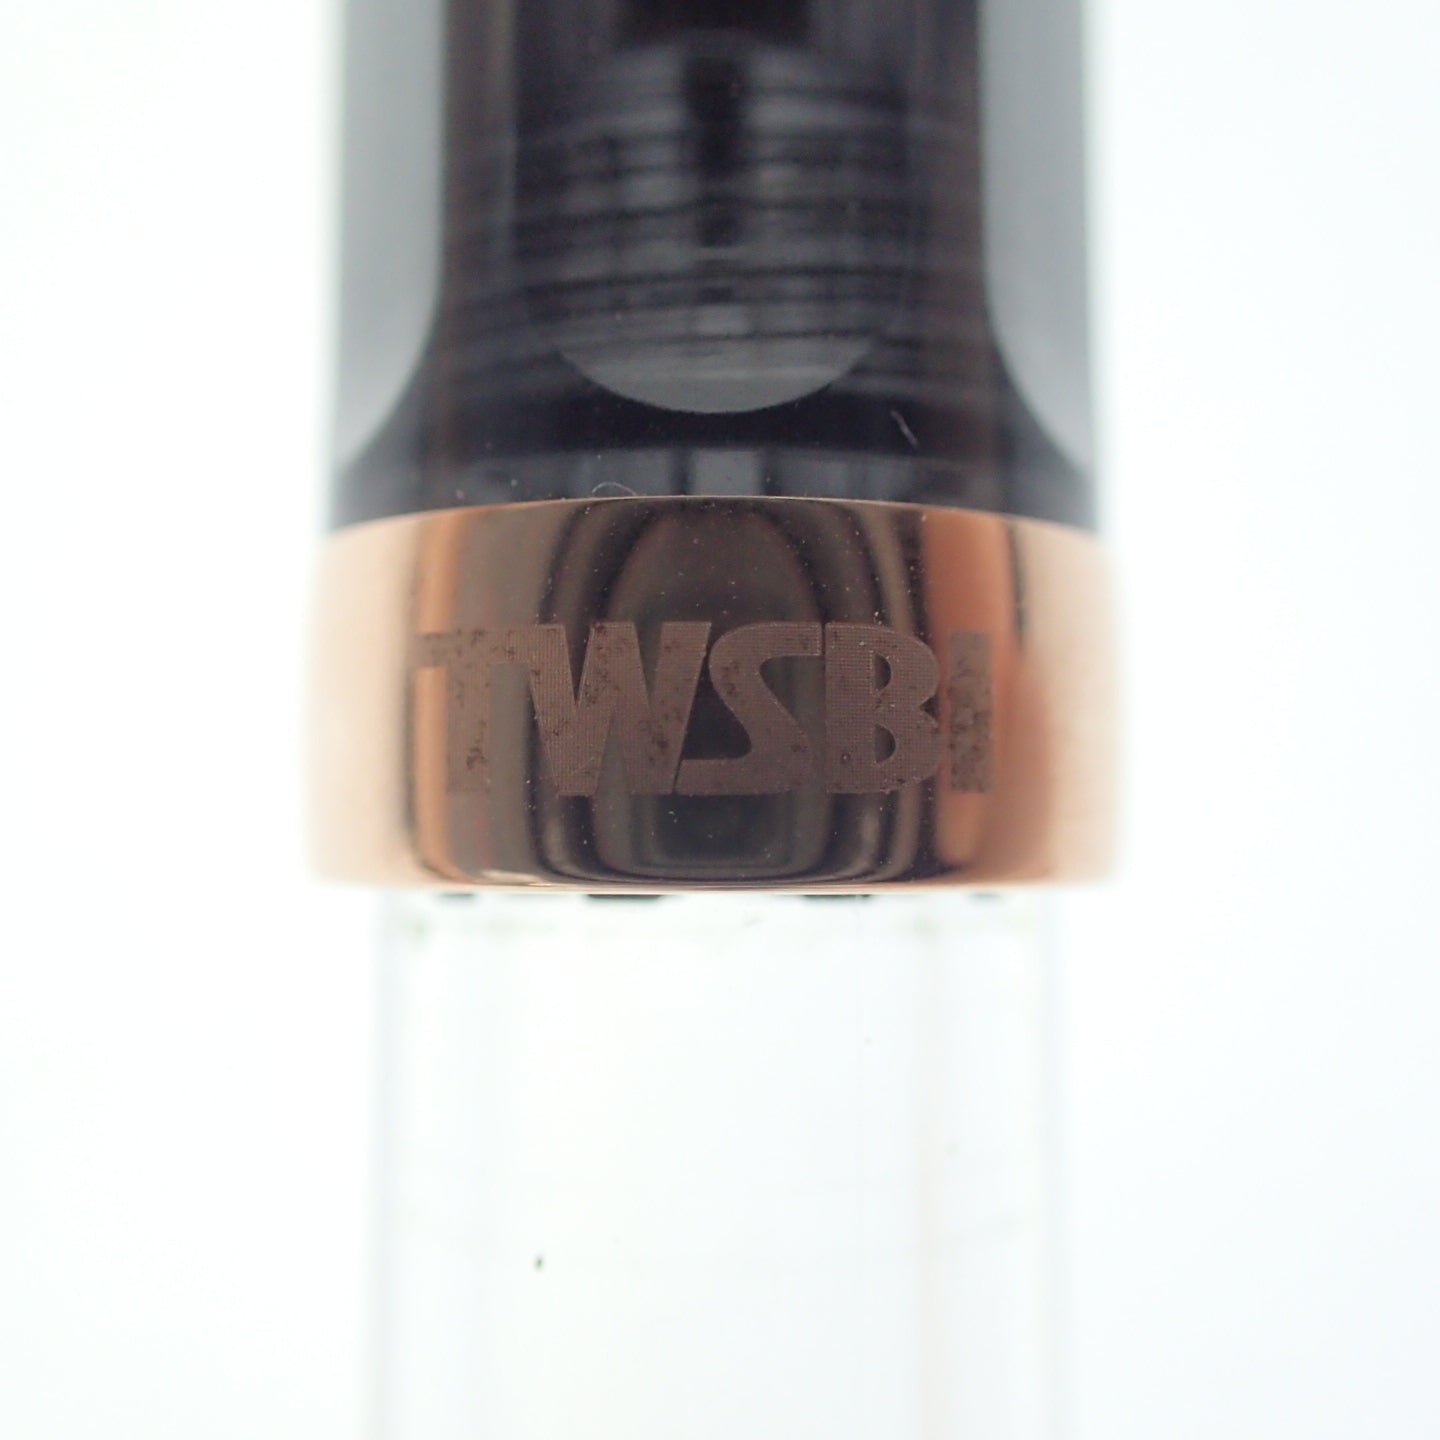 状况非常好 ◆ TWSBI 钢笔 Eco Smoke Rose G 黑色系列 TWSBI SMOKE ROSE [AFI11] 